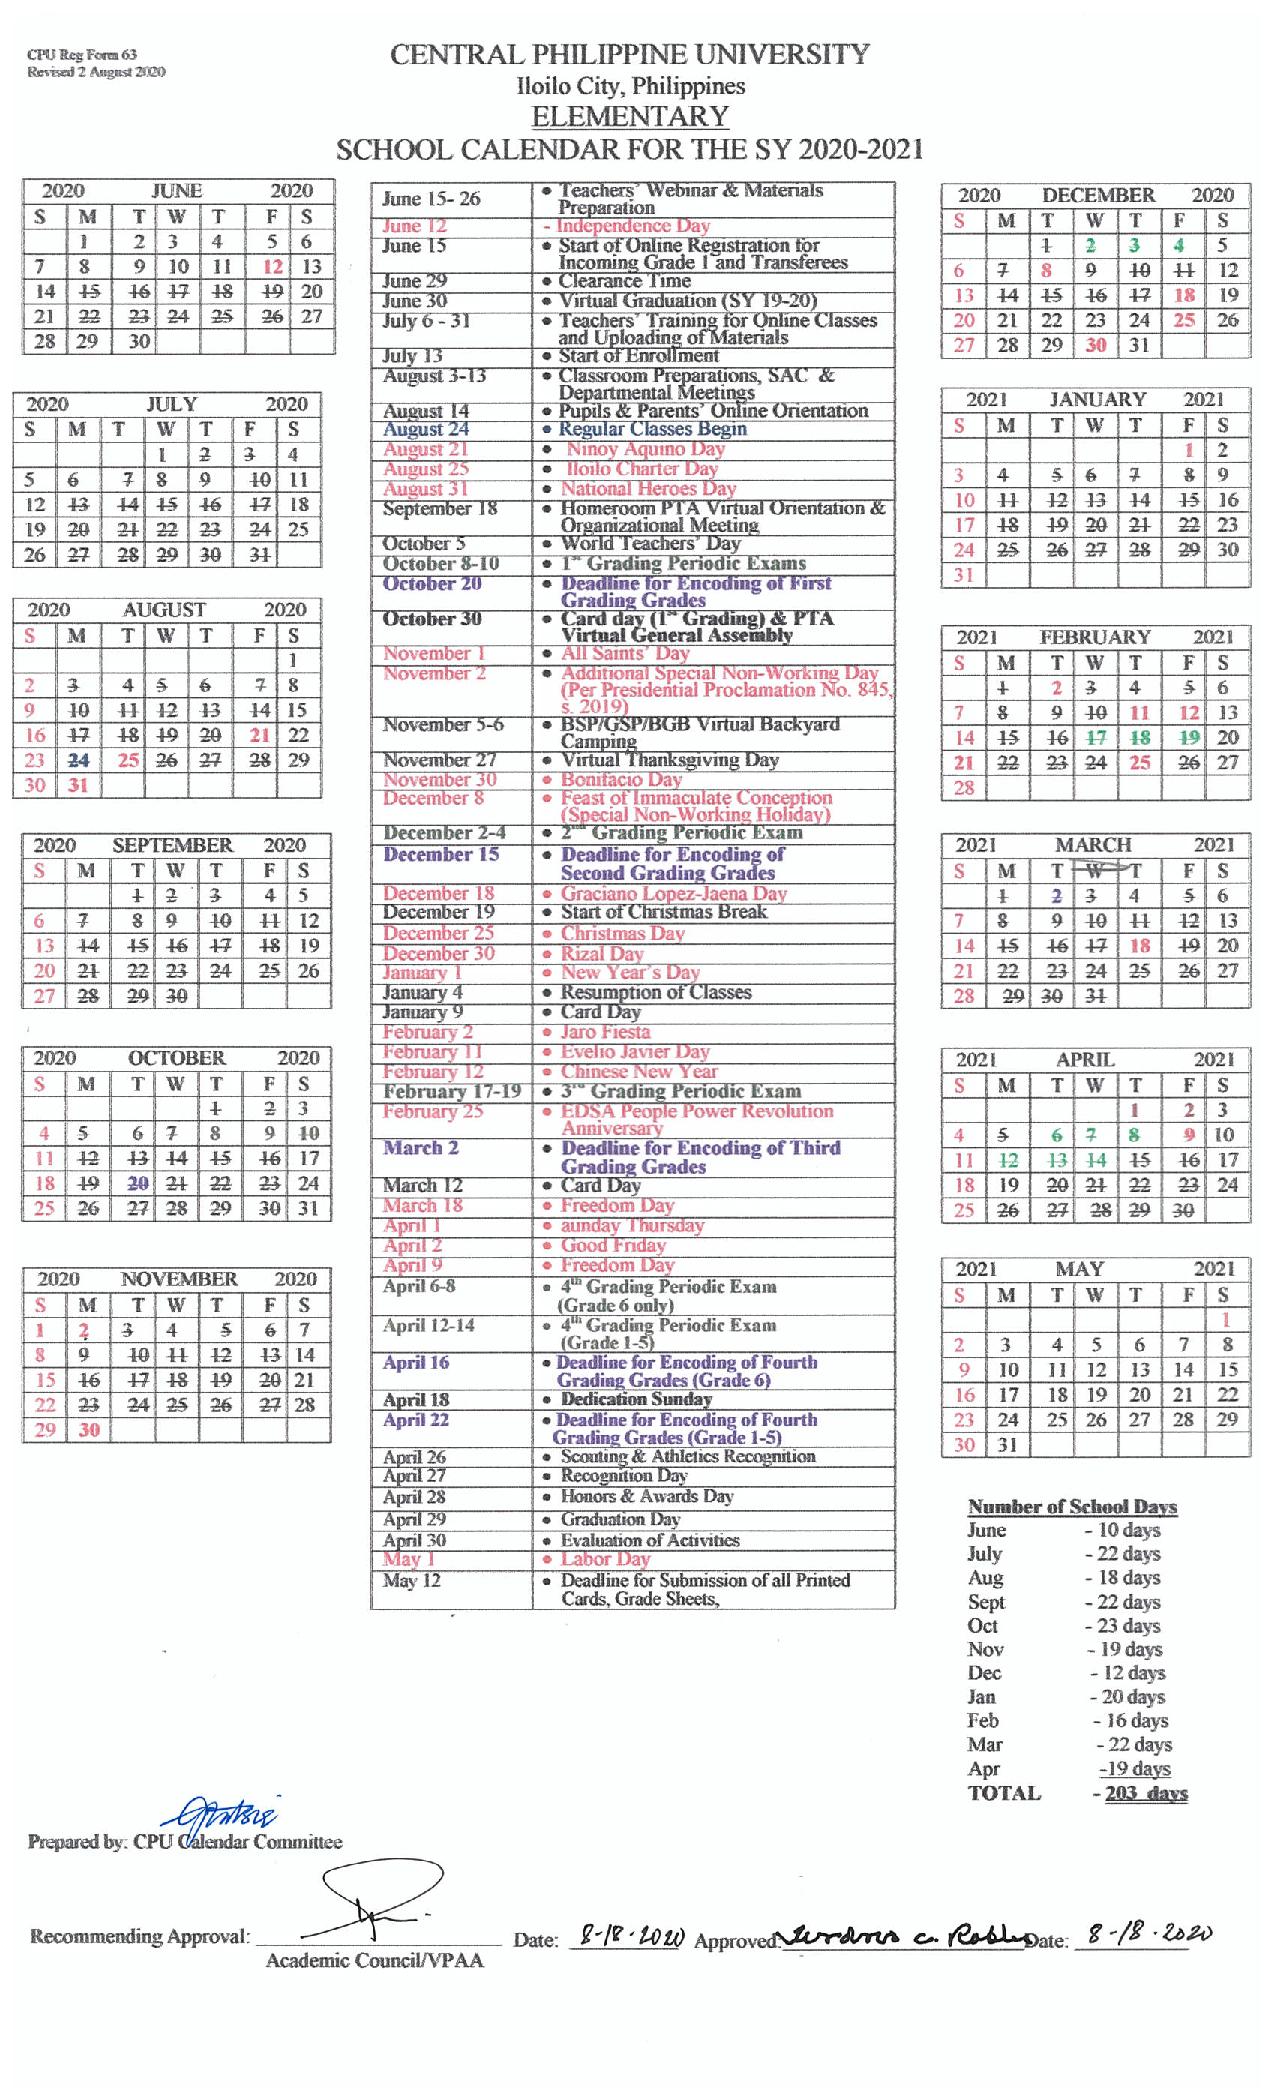 school-calendars-central-philippine-university